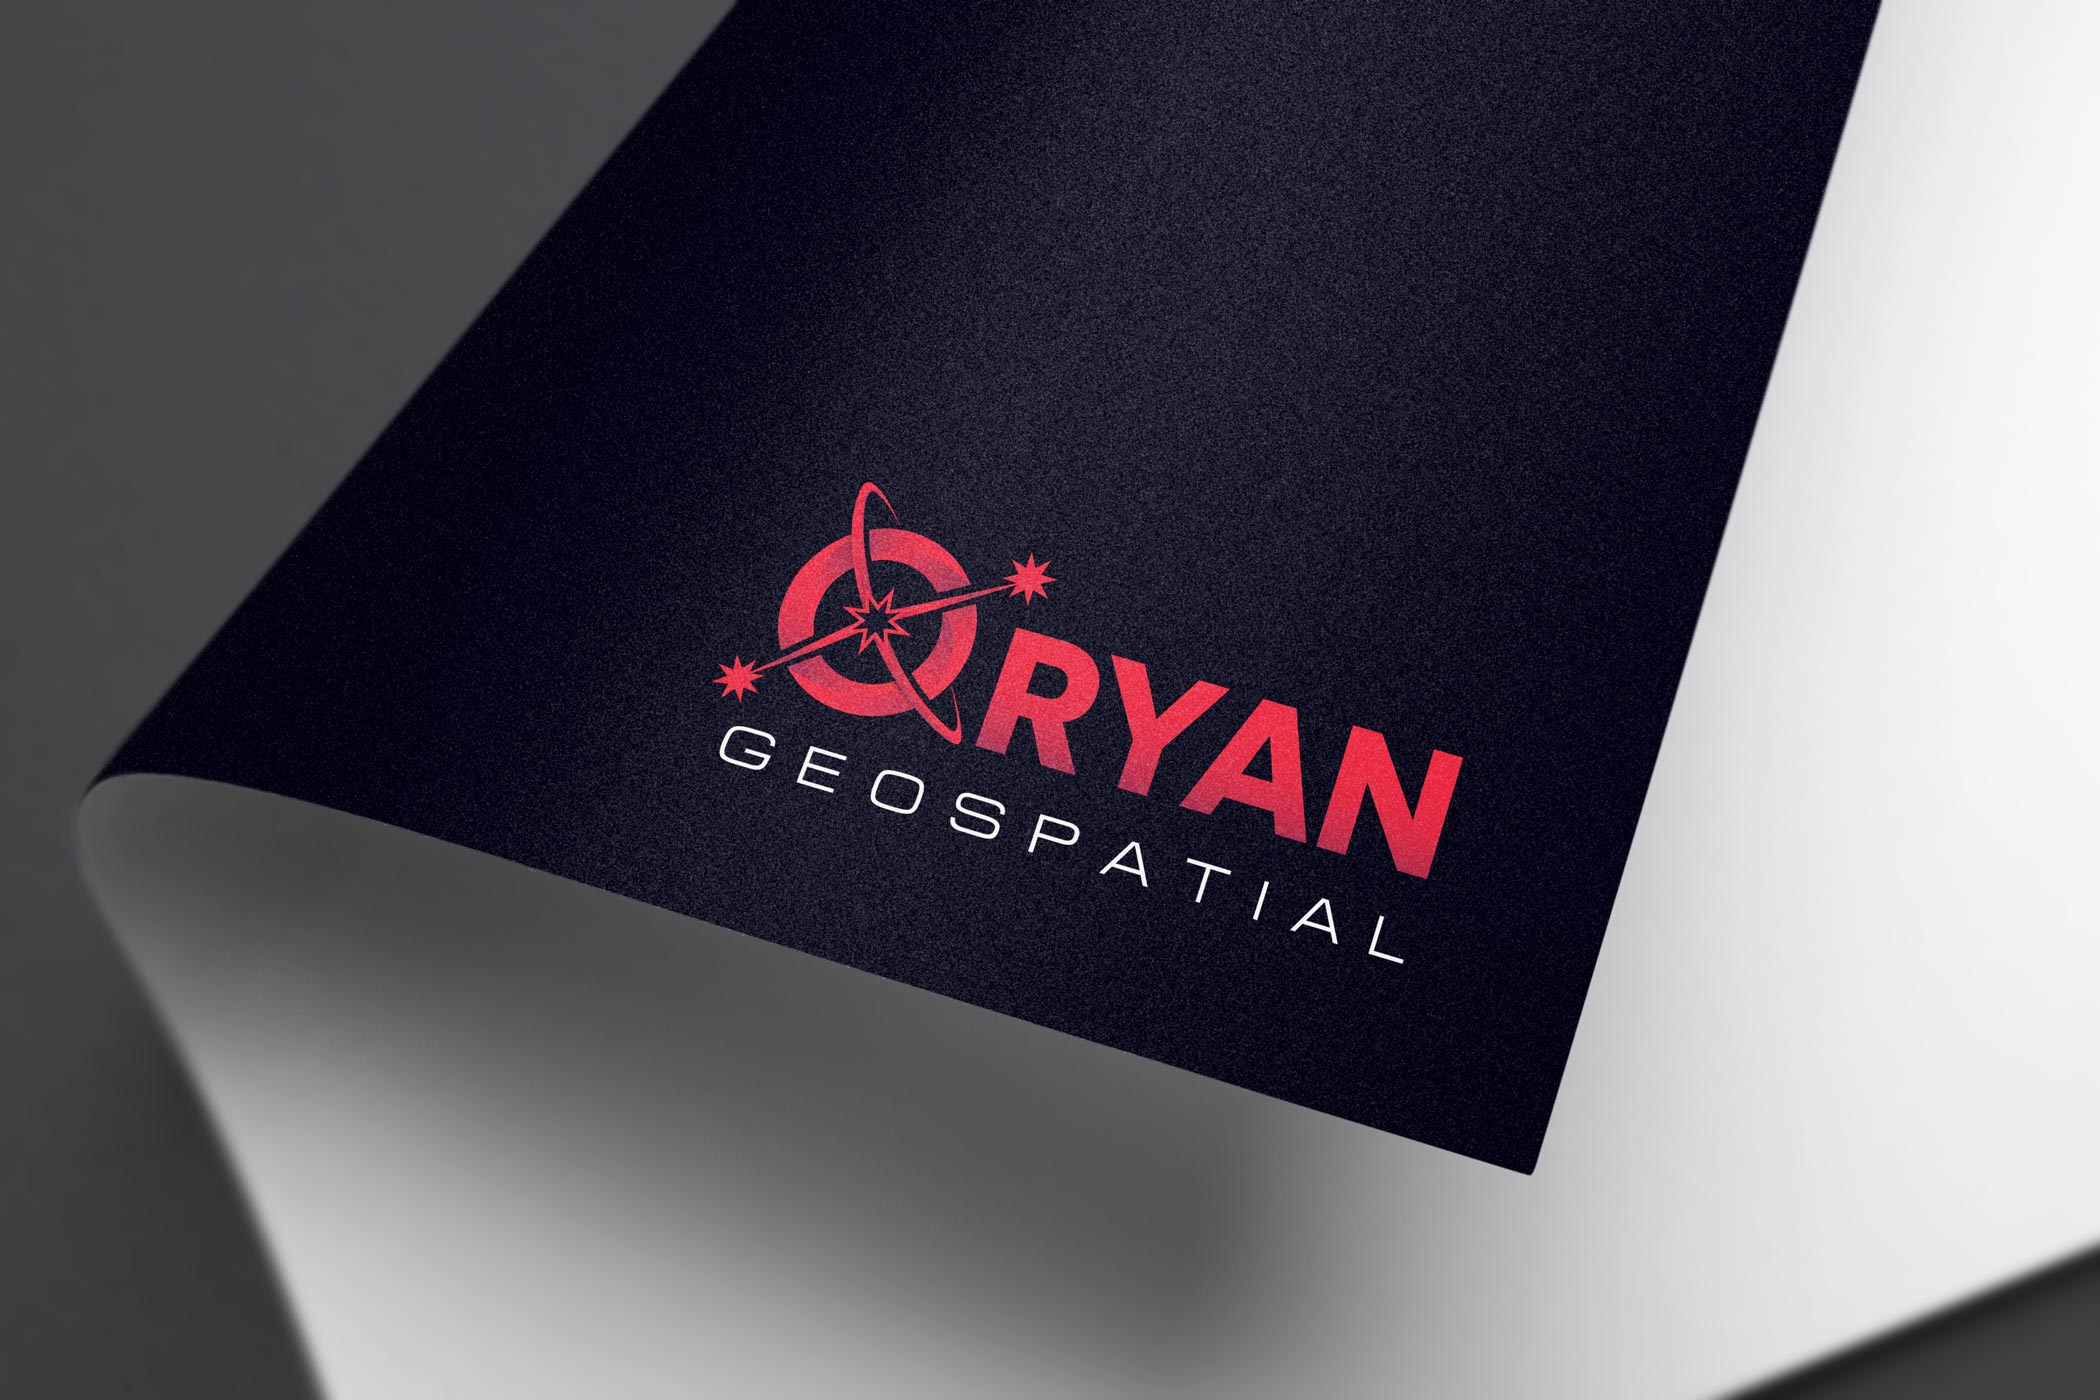 O'Ryan Geospatial logo printed onto paper